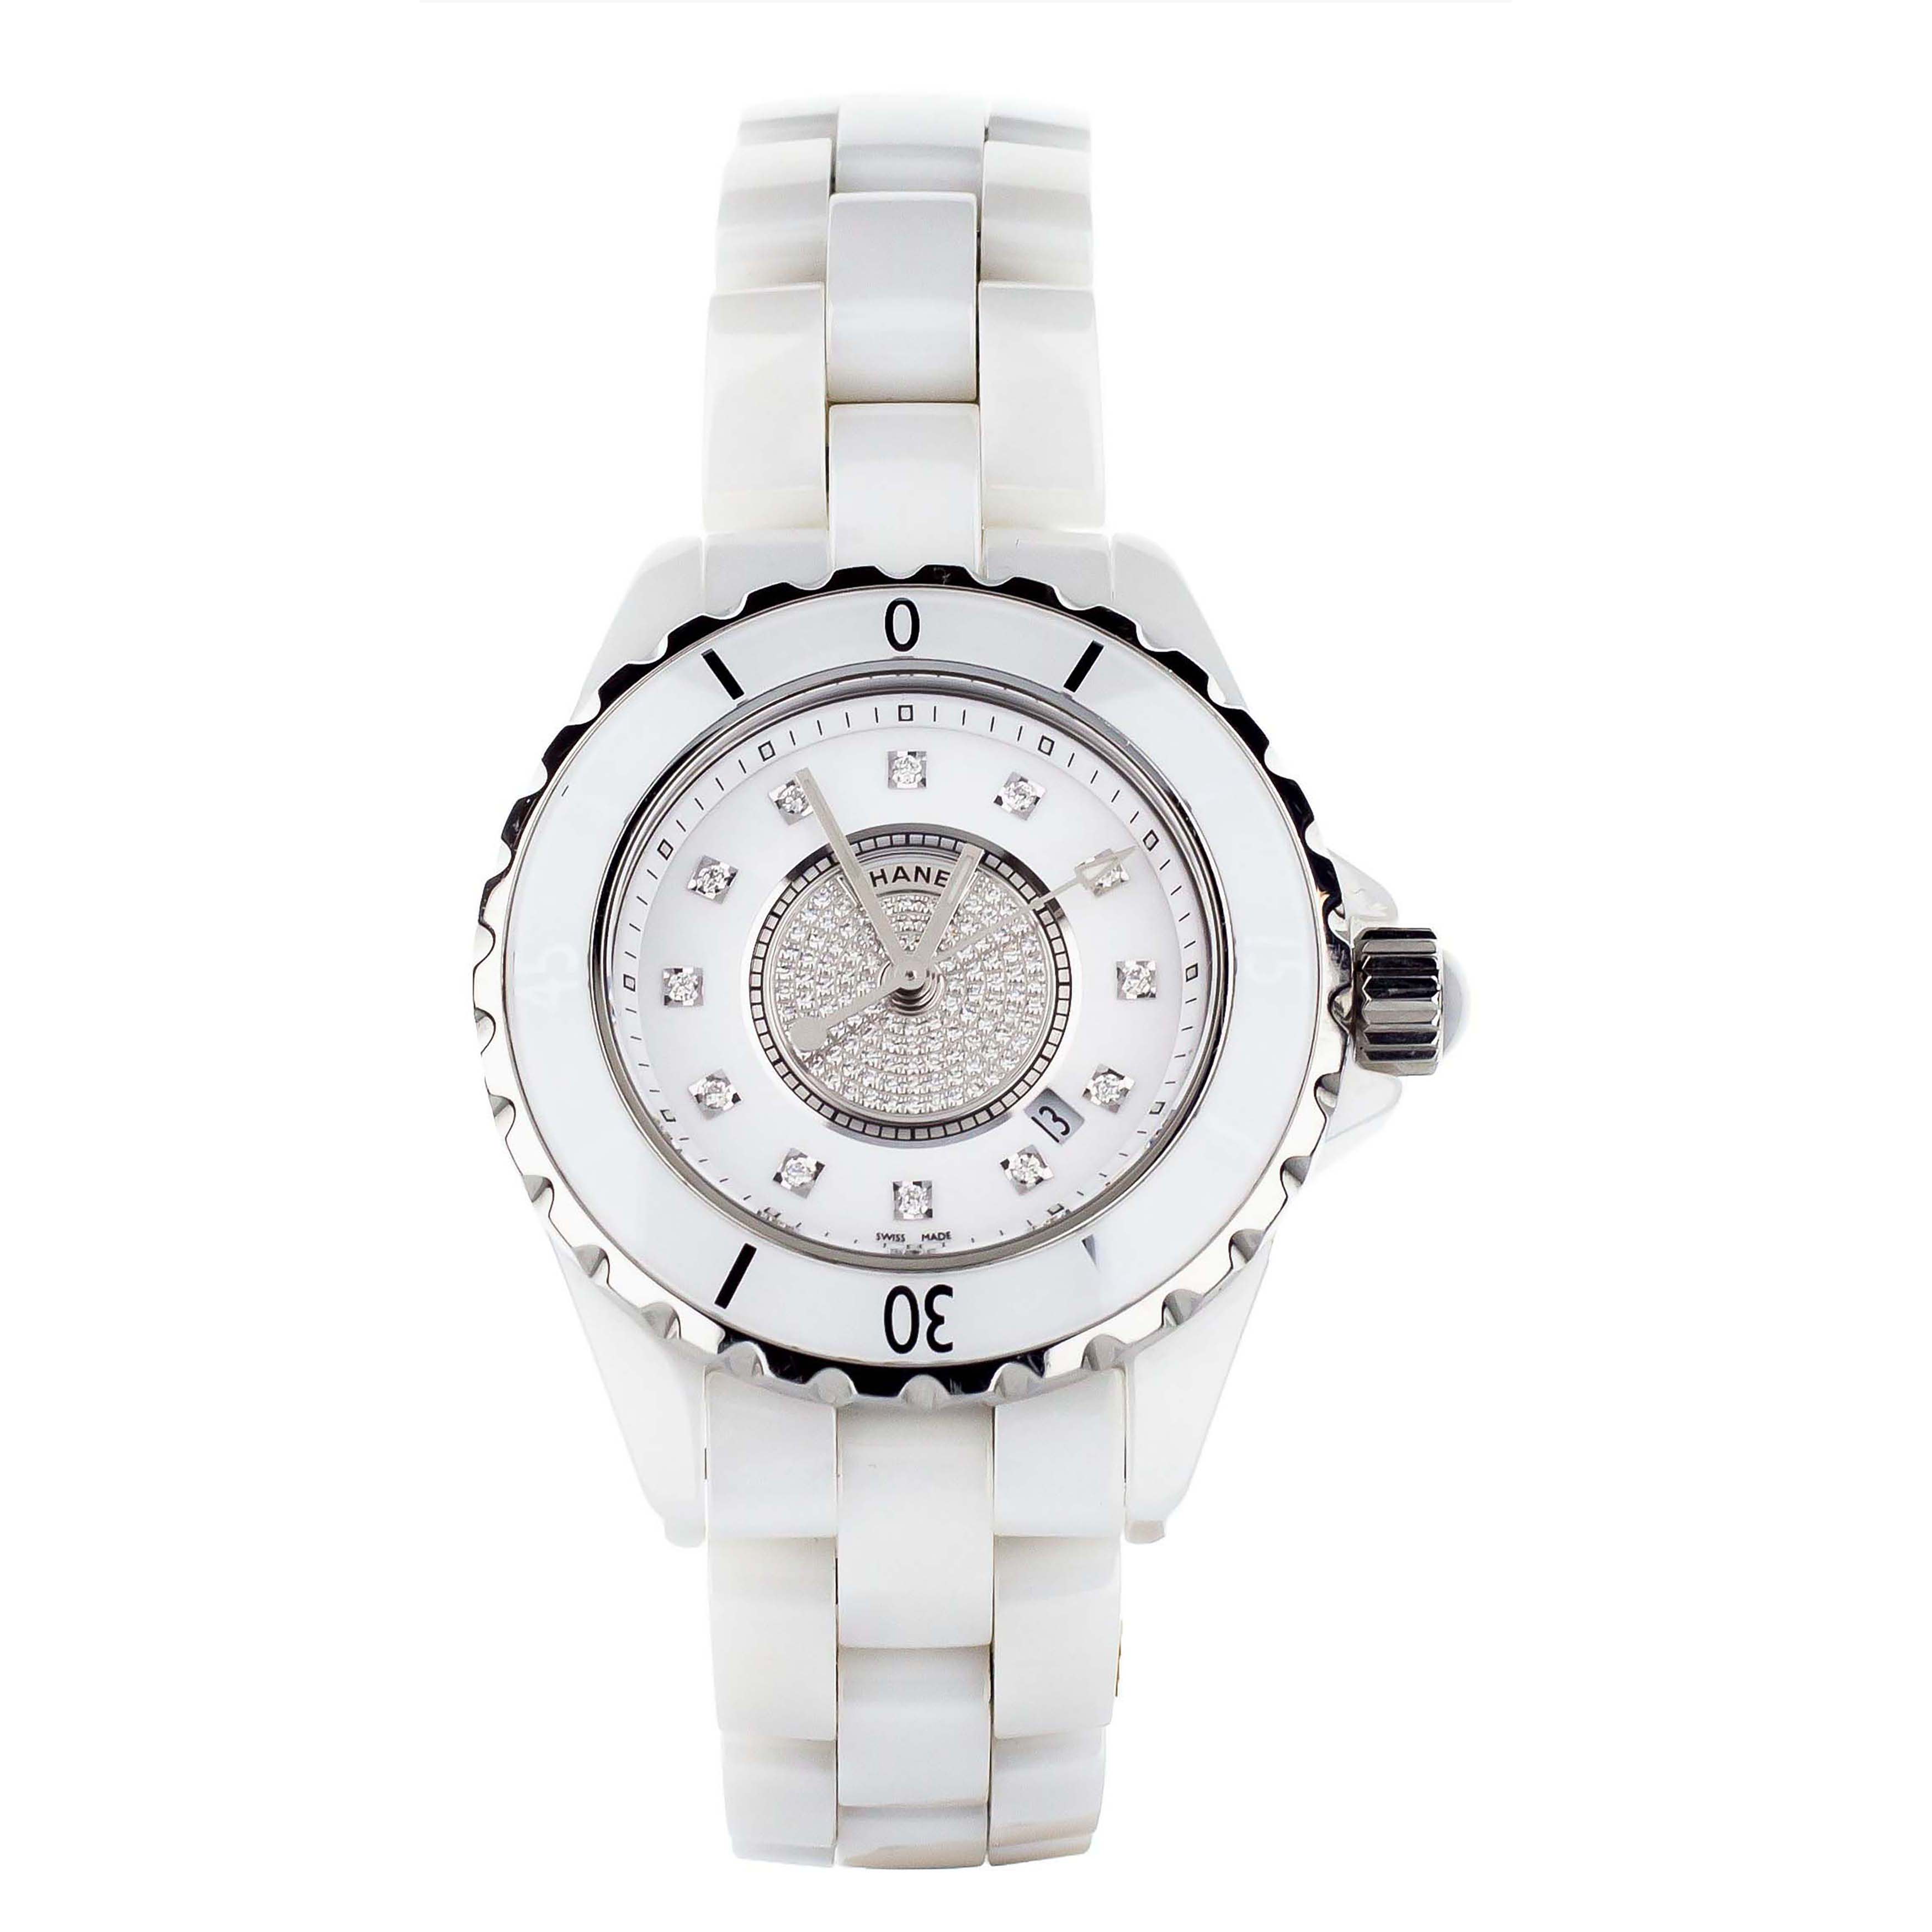 Chanel J12 Ceramic Diamonds Bracelet Black Dial Automatic Ladies Watch, CHANEL